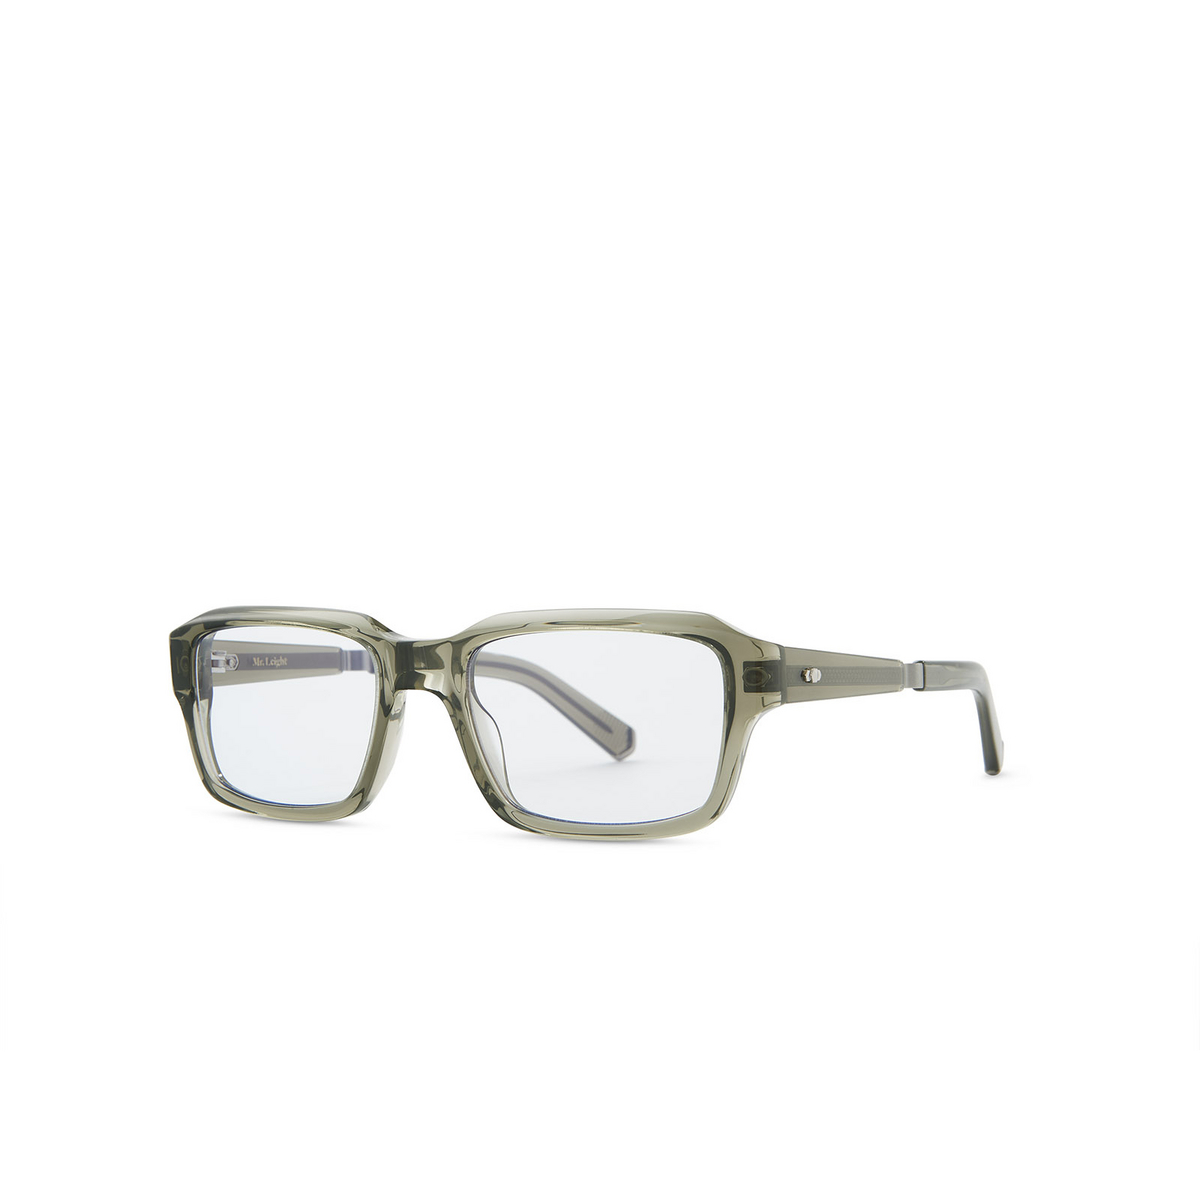 Mr. Leight KANE C Eyeglasses HUN-SV-DEM SKY Hunter-Silver-Demo Sky - three-quarters view